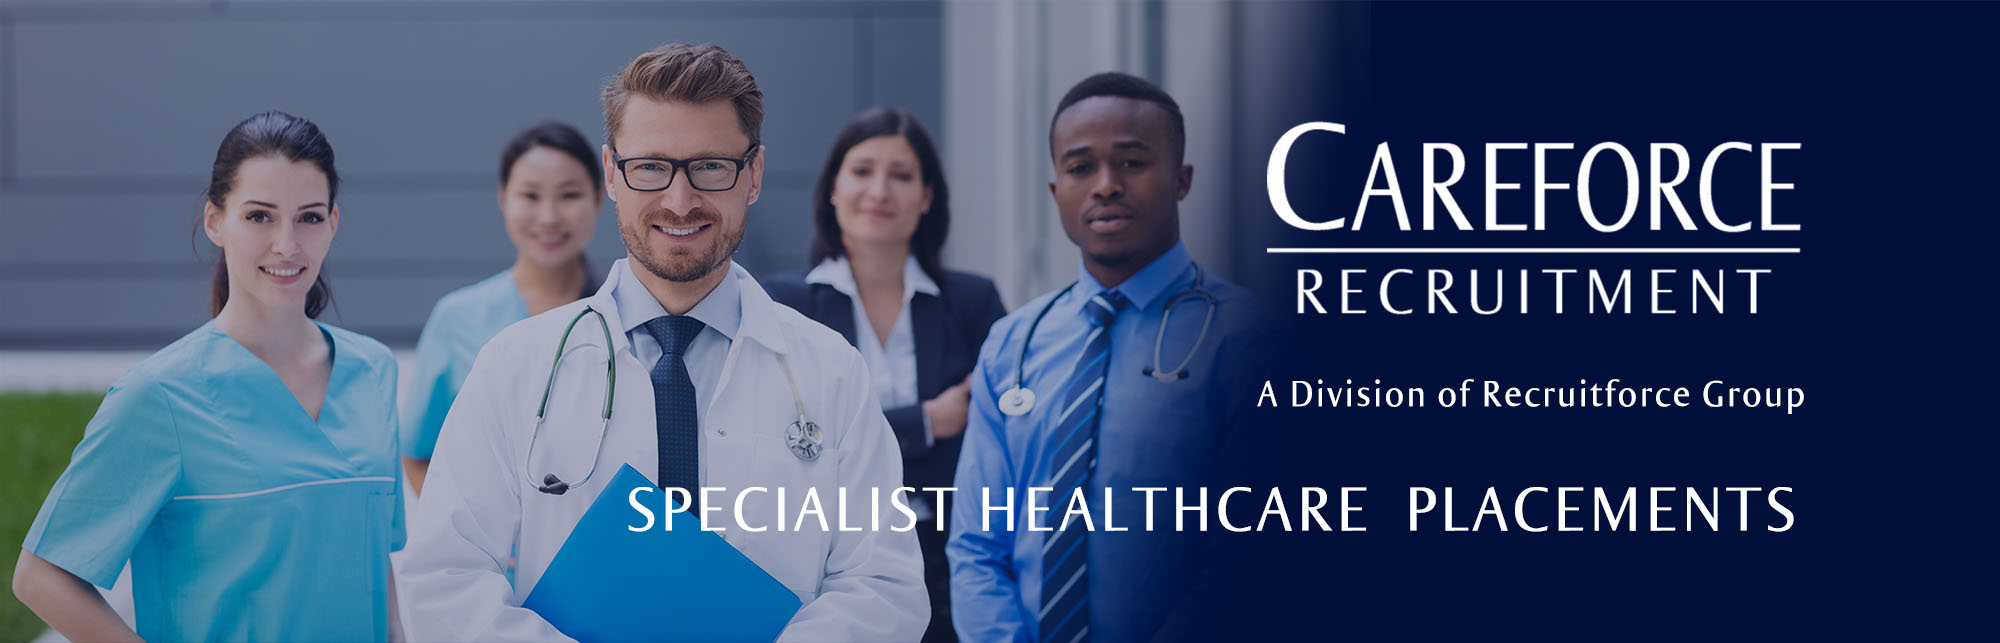 Careforce Recruitment - Specialist Healthcare  Placements